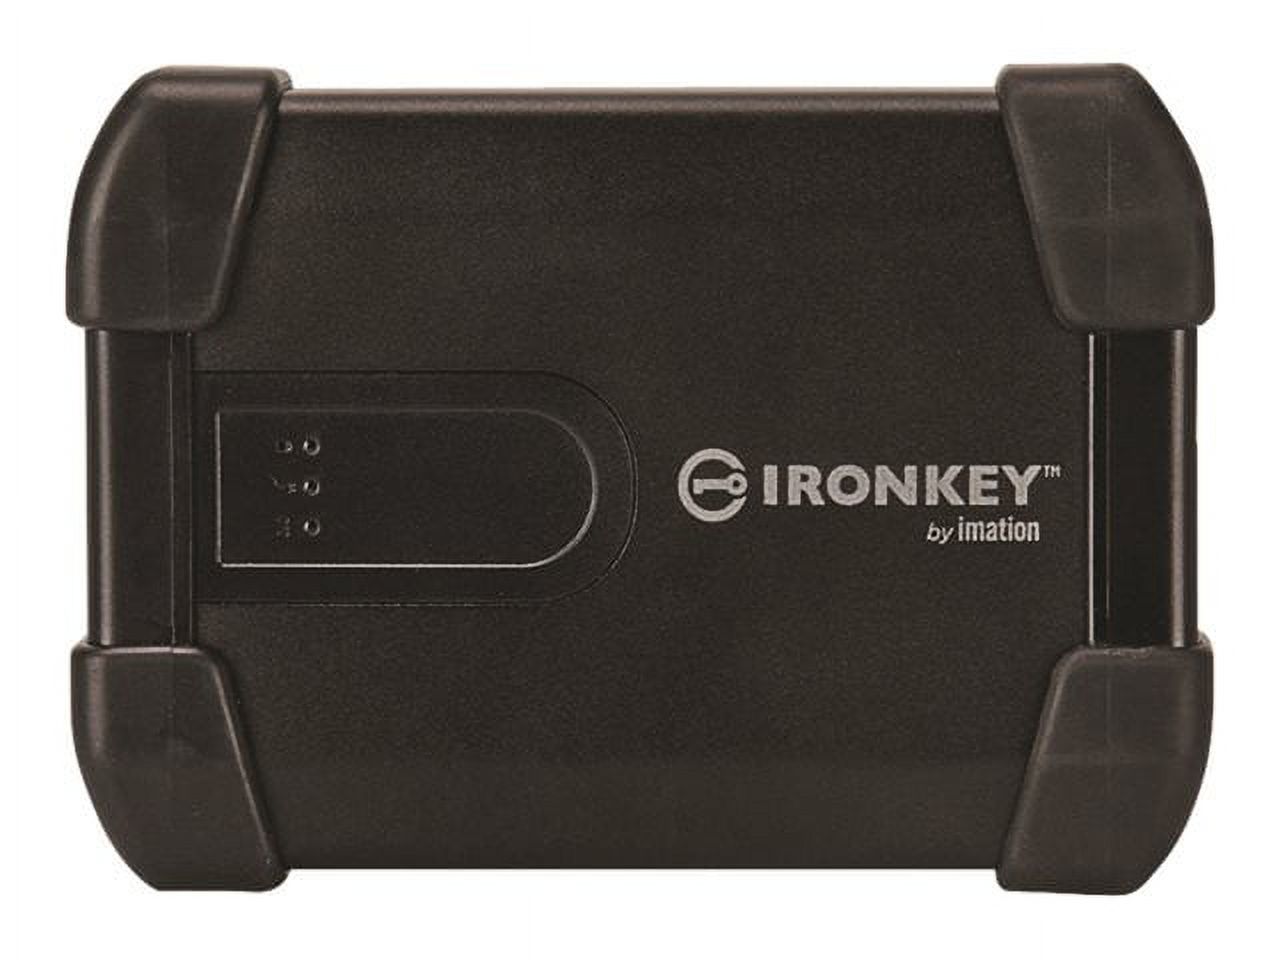 IronKey 500 GB Hard Drive, 2.5" External - image 2 of 6